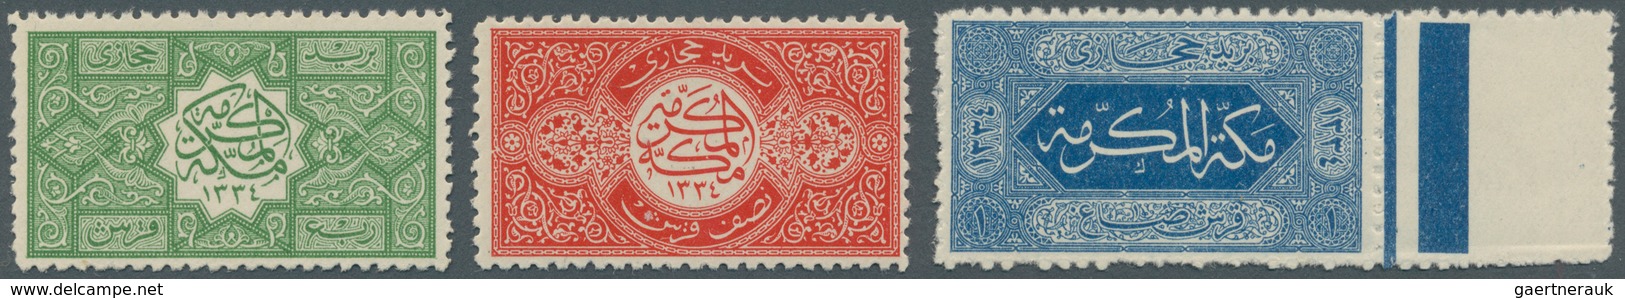 Saudi-Arabien - Hedschas: 1916, 1/2 Pia-1 Pia Set Perforated 12, The 1/2 Pia Green NG, Otherwise Min - Saudi Arabia